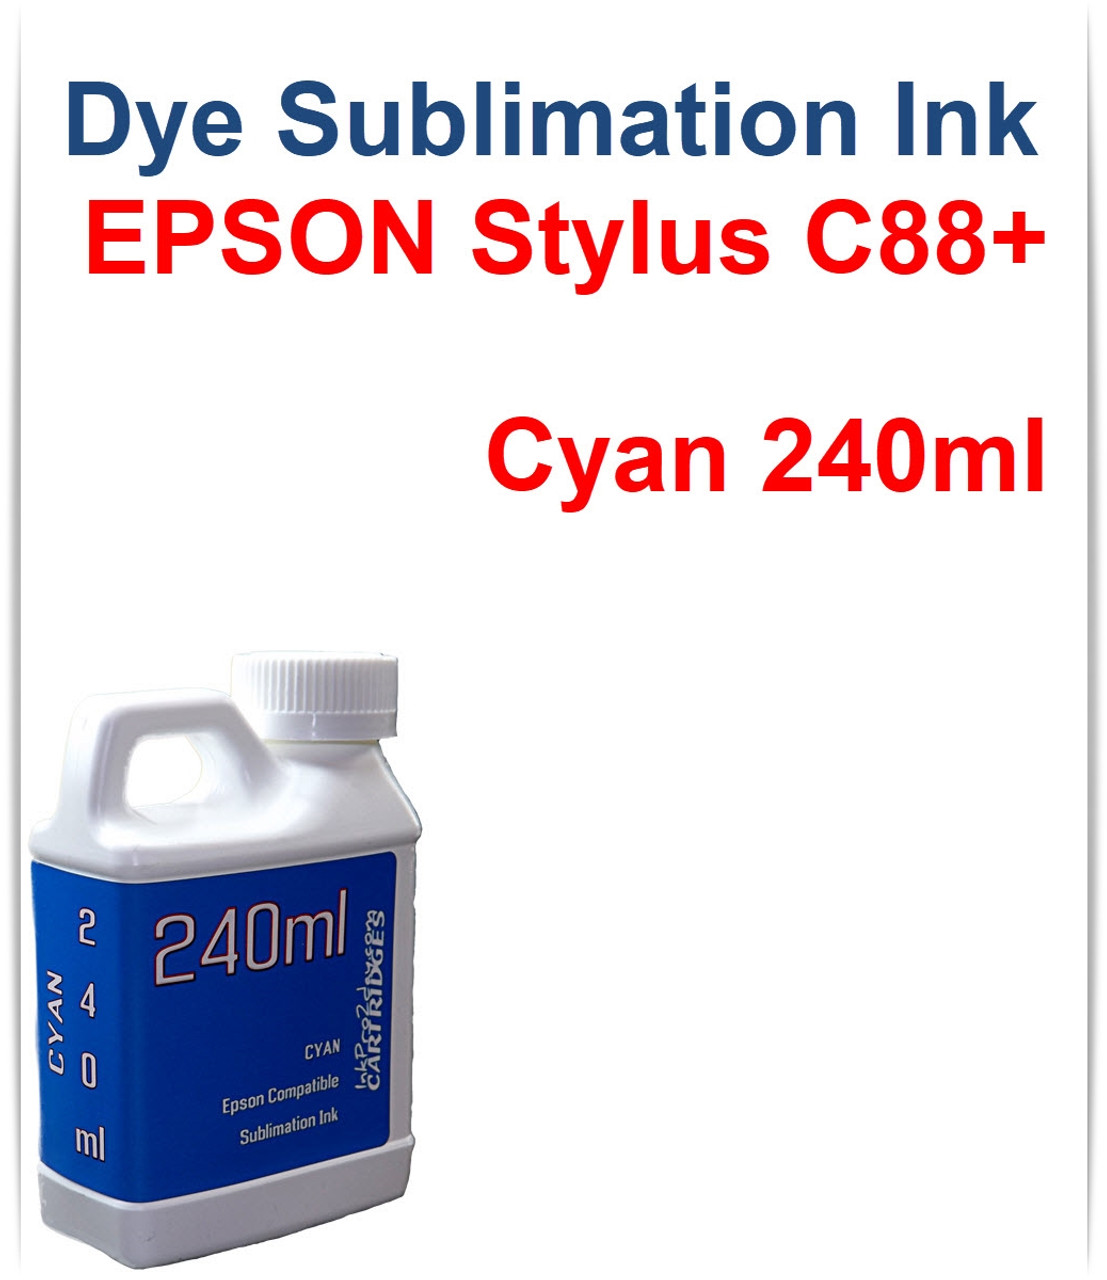 Cyan 240ml bottle Dye Sublimation ink for Epson Stylus C88+ printer